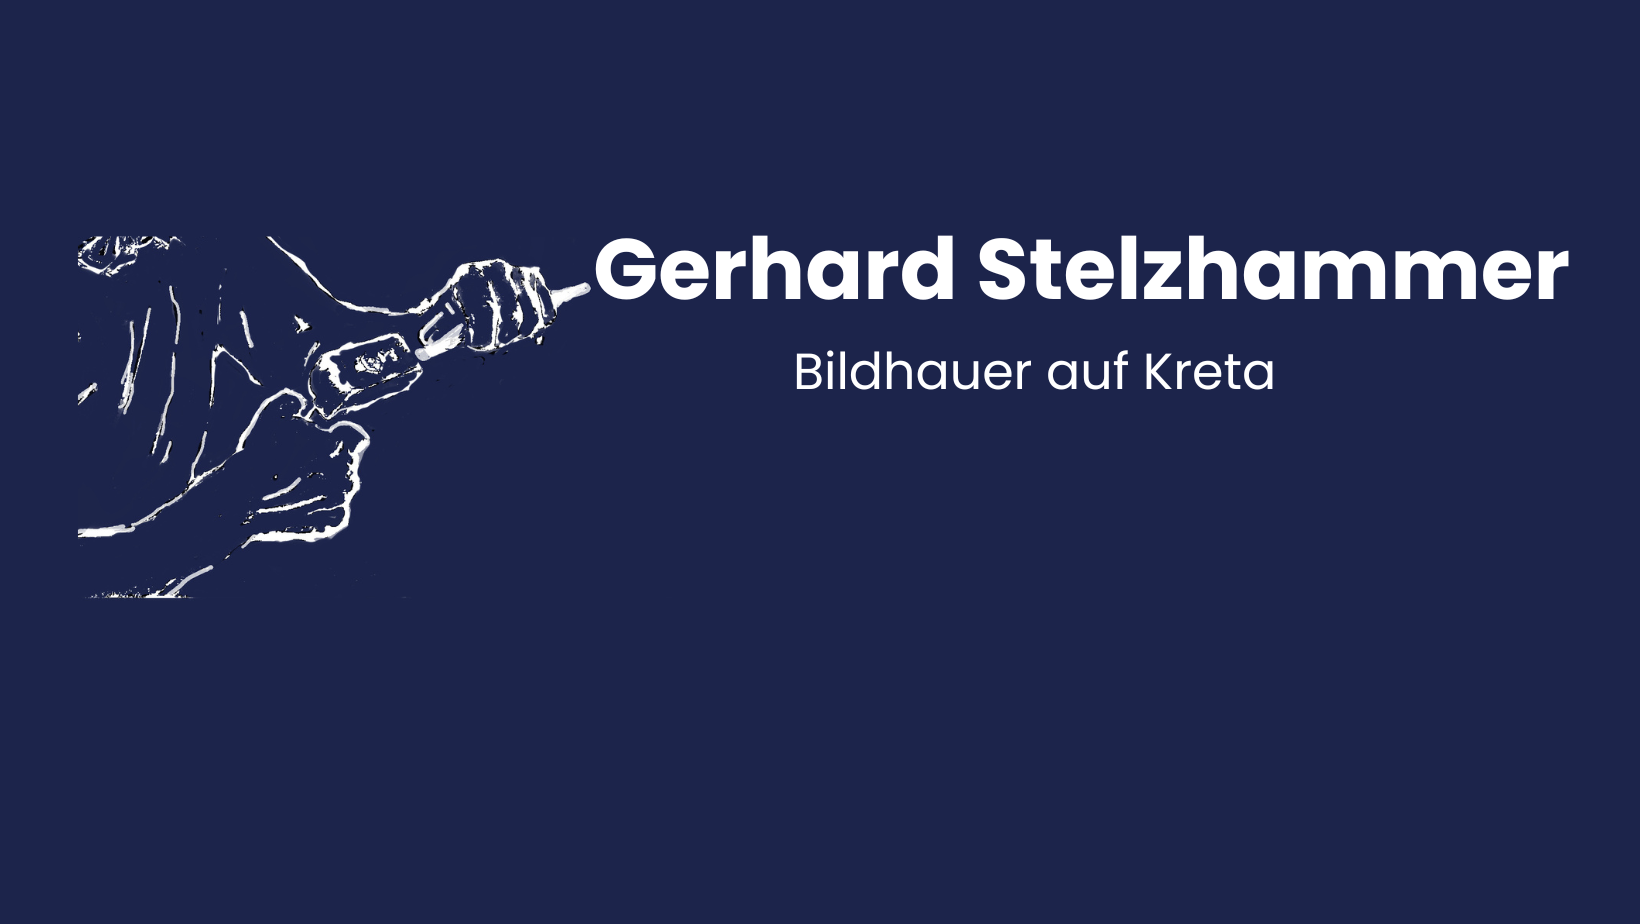 Gerhard Stelzhammer